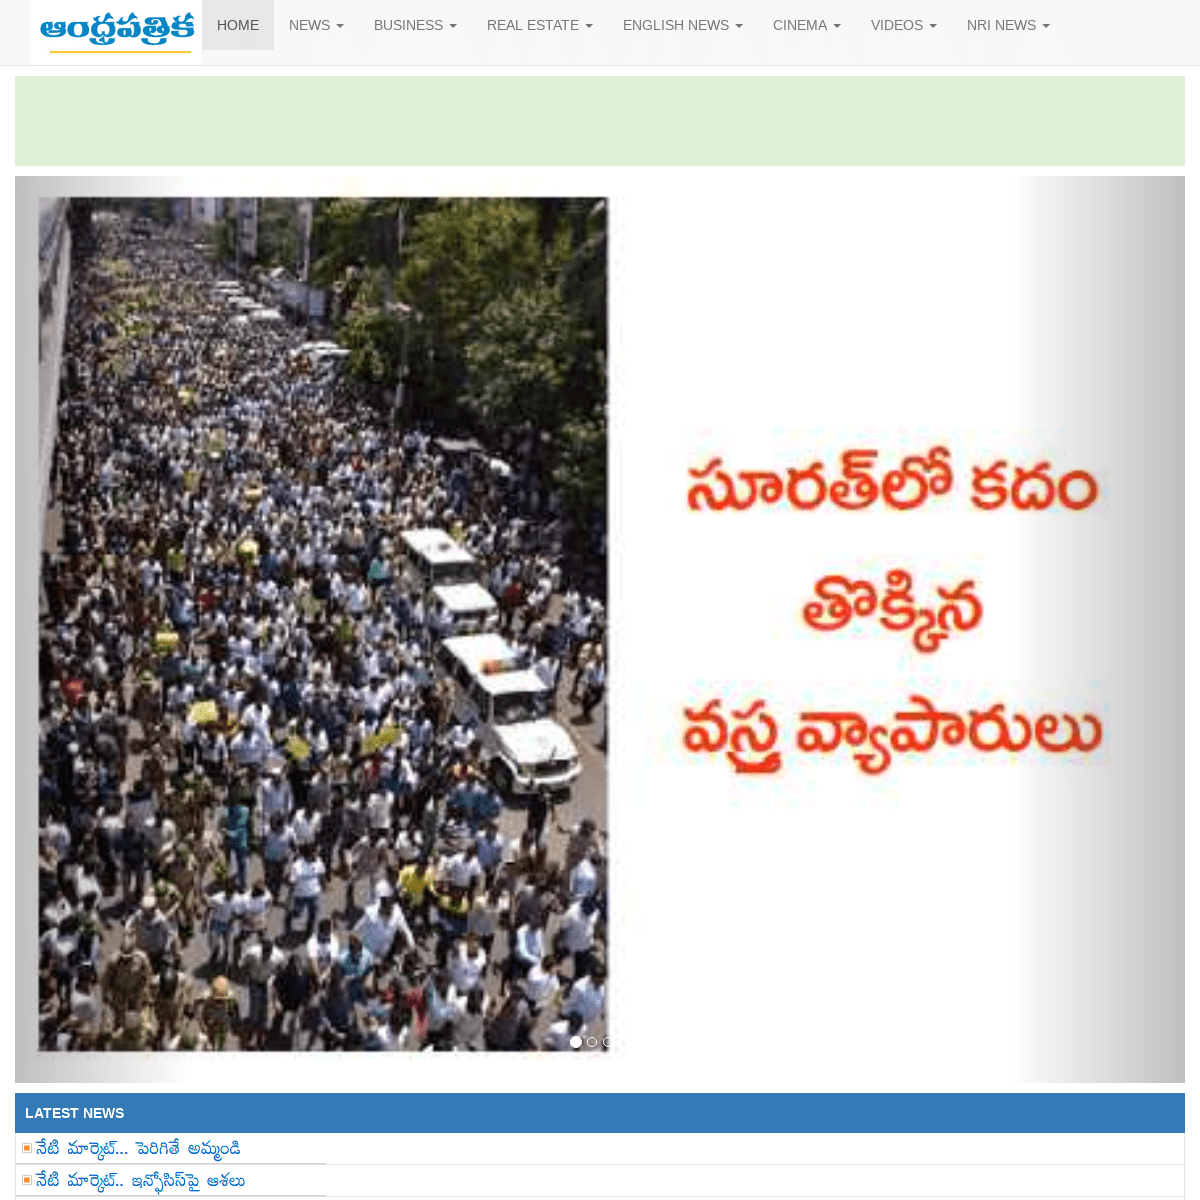 A Comprehensive Political and Business News website focussing India especially Andhra Pradesh and Telangana